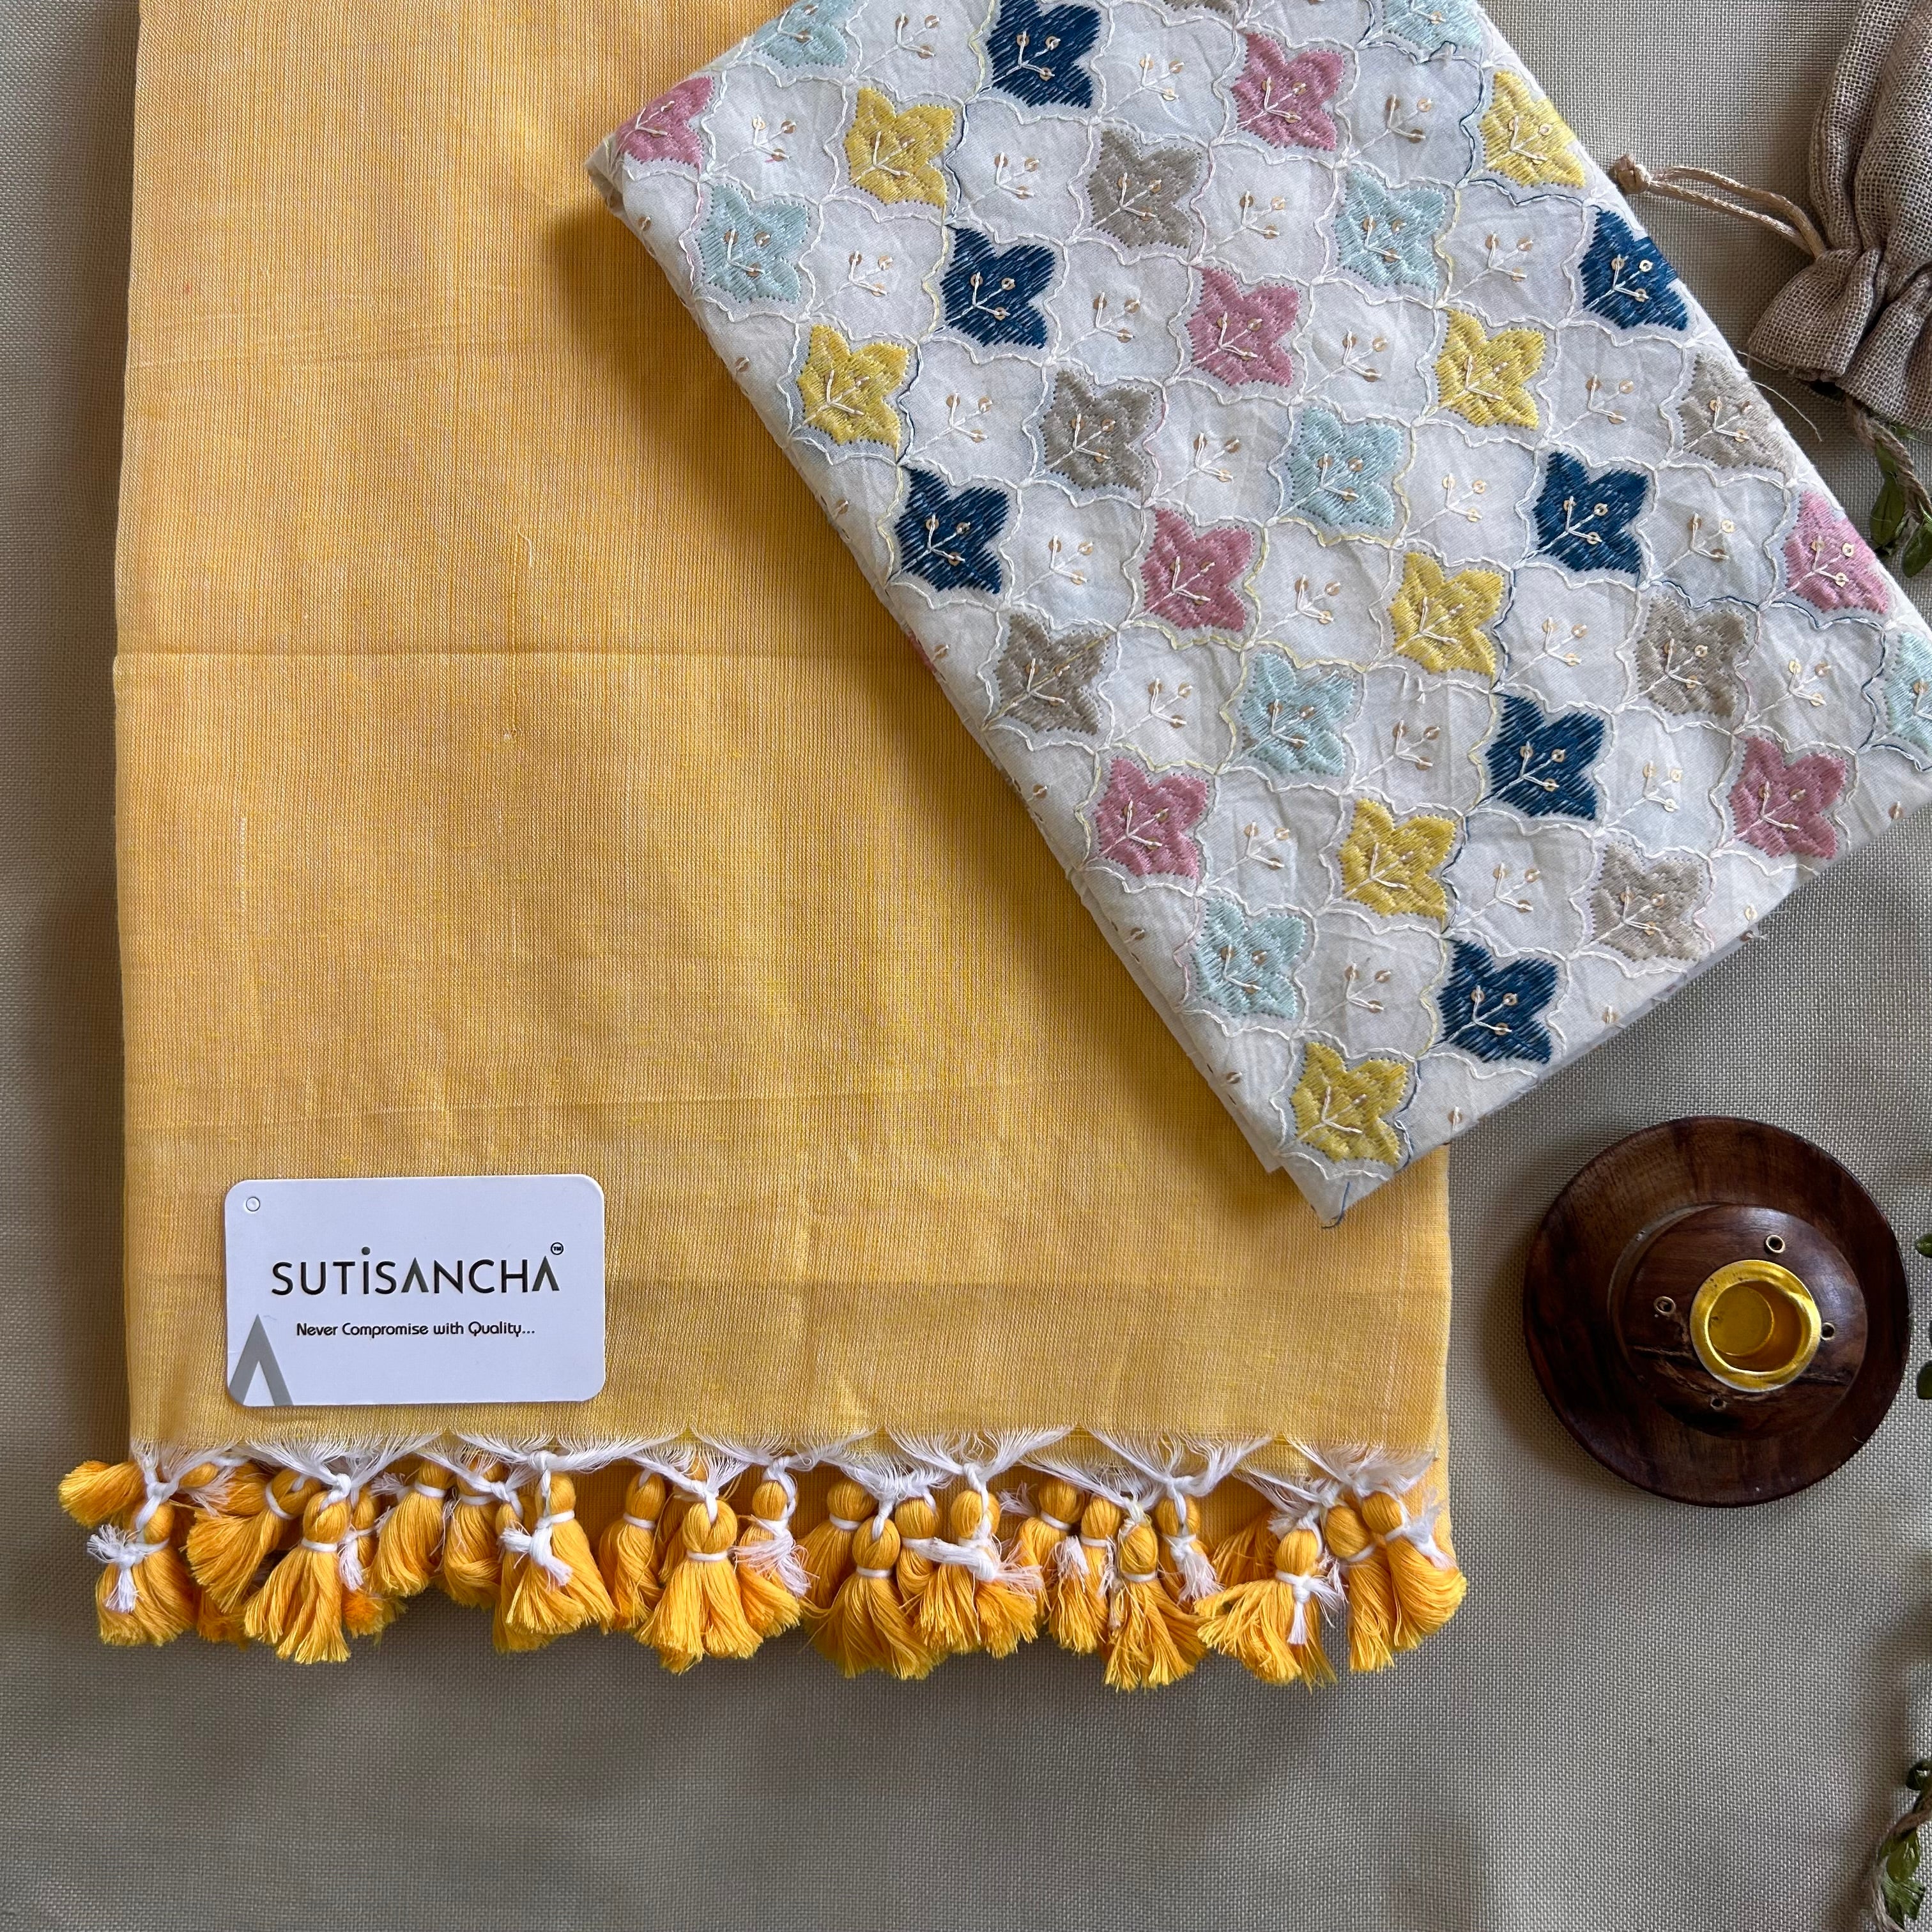 Sutisancha Yellow Handloom Cotton Saree with Designer Work Blouse